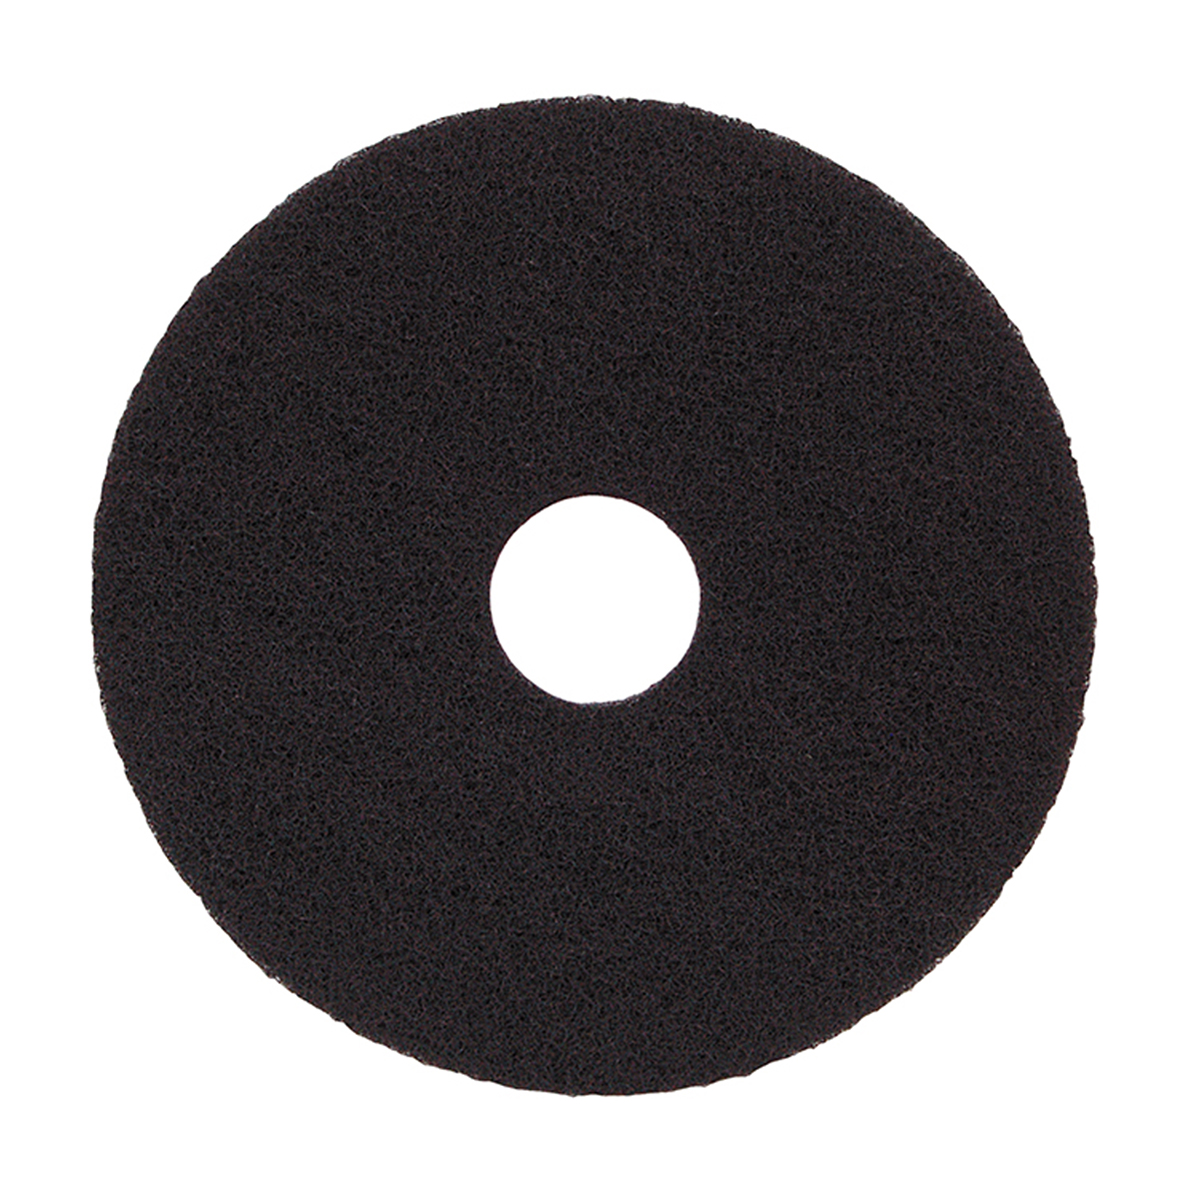 Standard speed floor pads 13 inch - black - box of 5